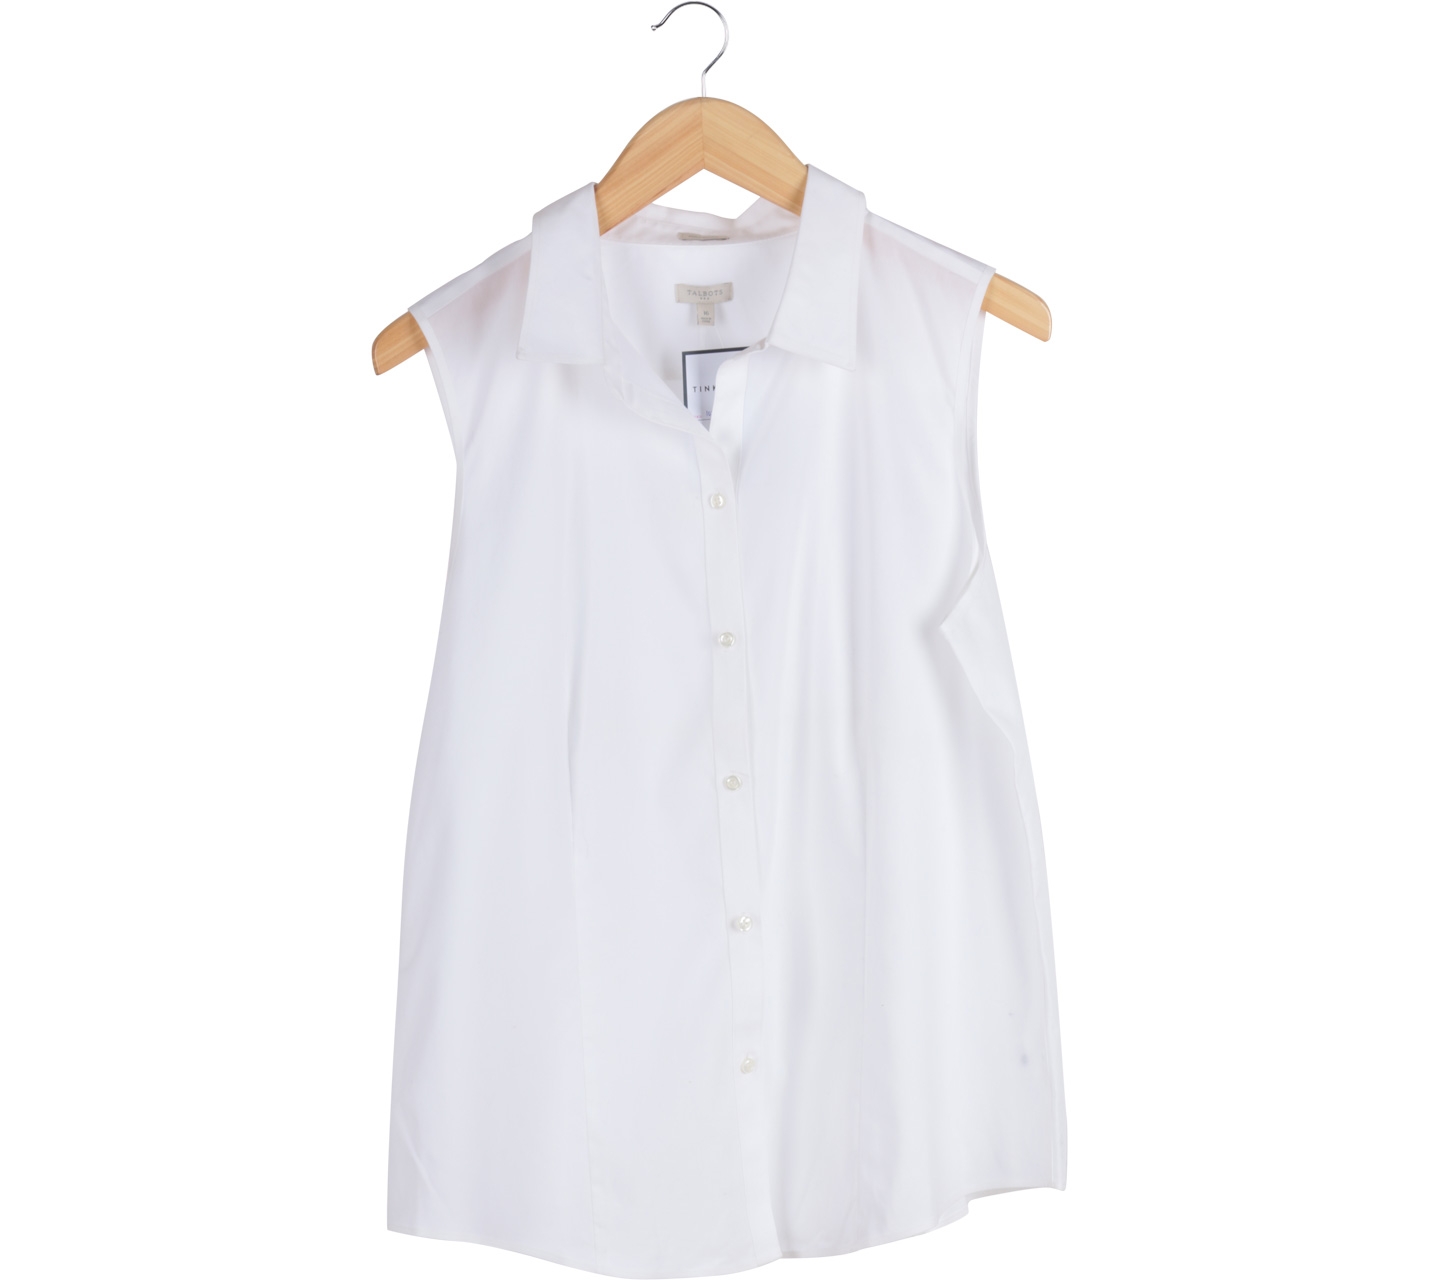 Talbots White Sleeveless Shirt